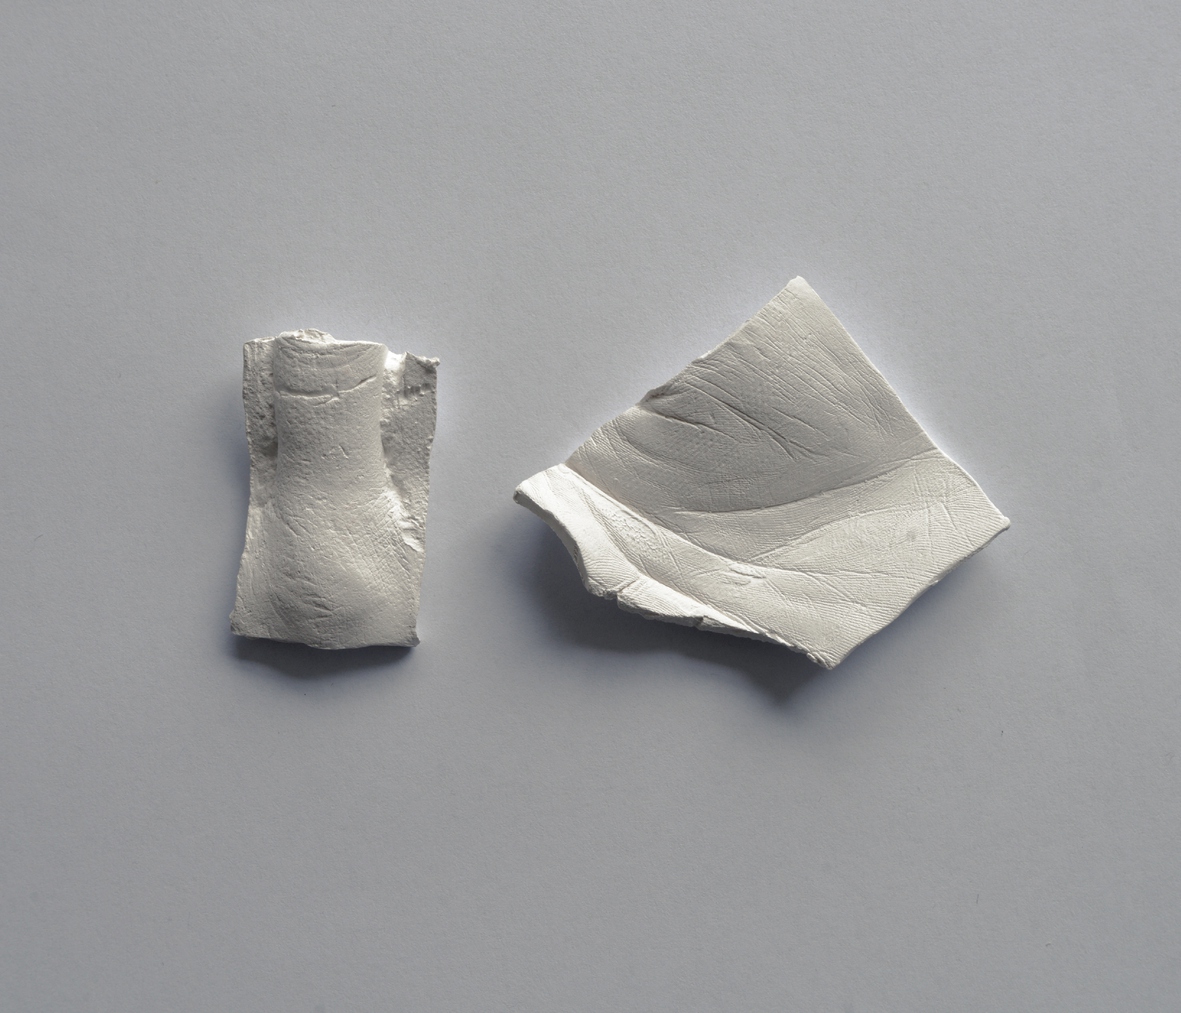 Image: Areta Wilkinson, Untitled (fingers), 2003, ceramic. Photo: Studio La Gonda.